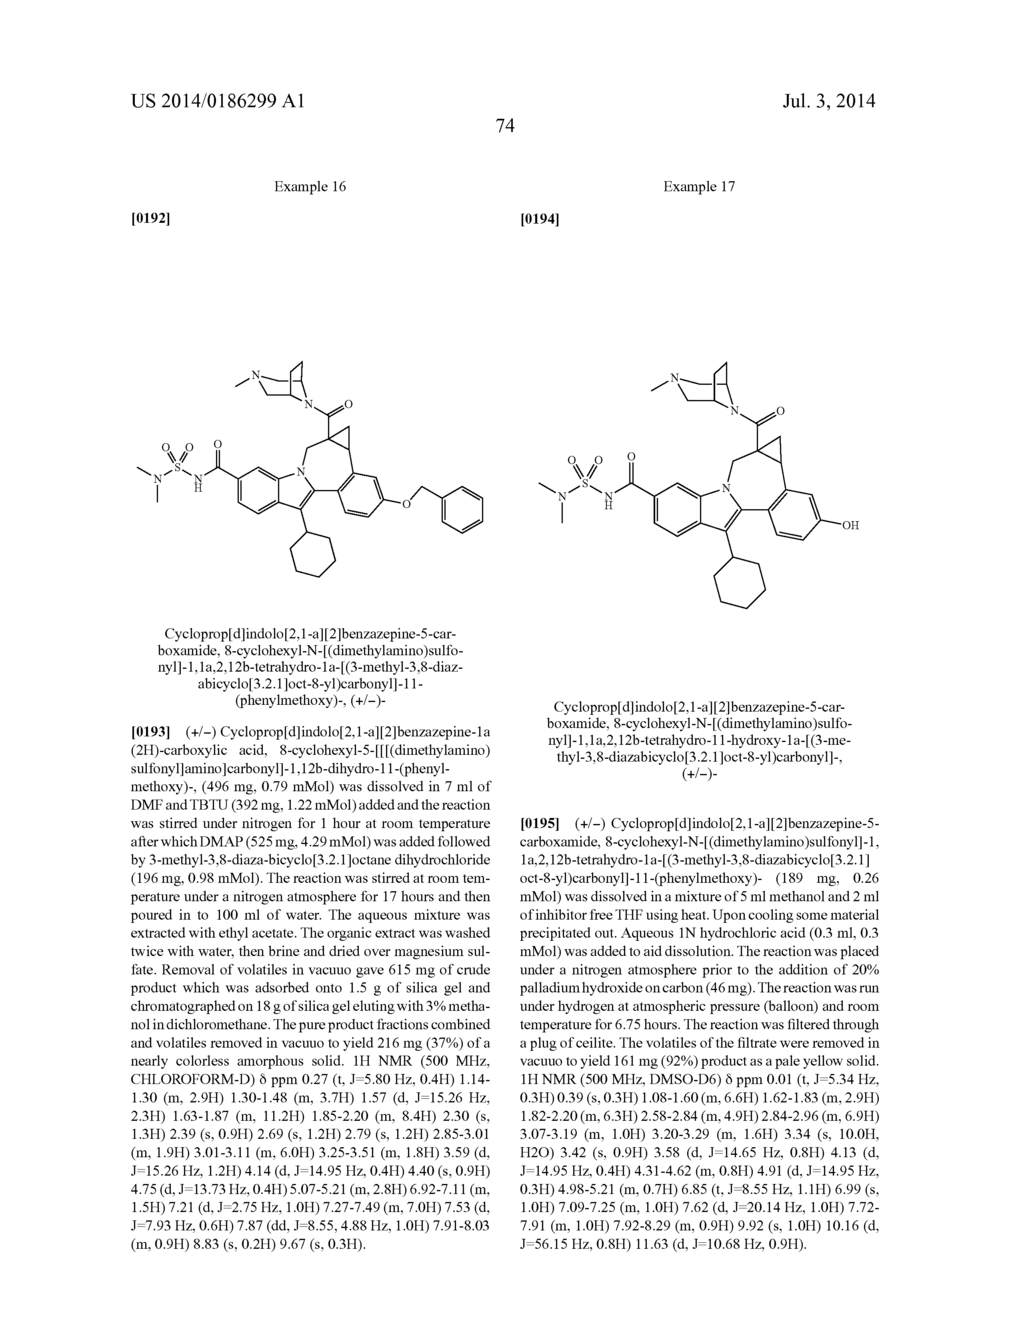 Cyclopropyl Fused Indolobenzazepine HCV NS5B Inhibitors - diagram, schematic, and image 75